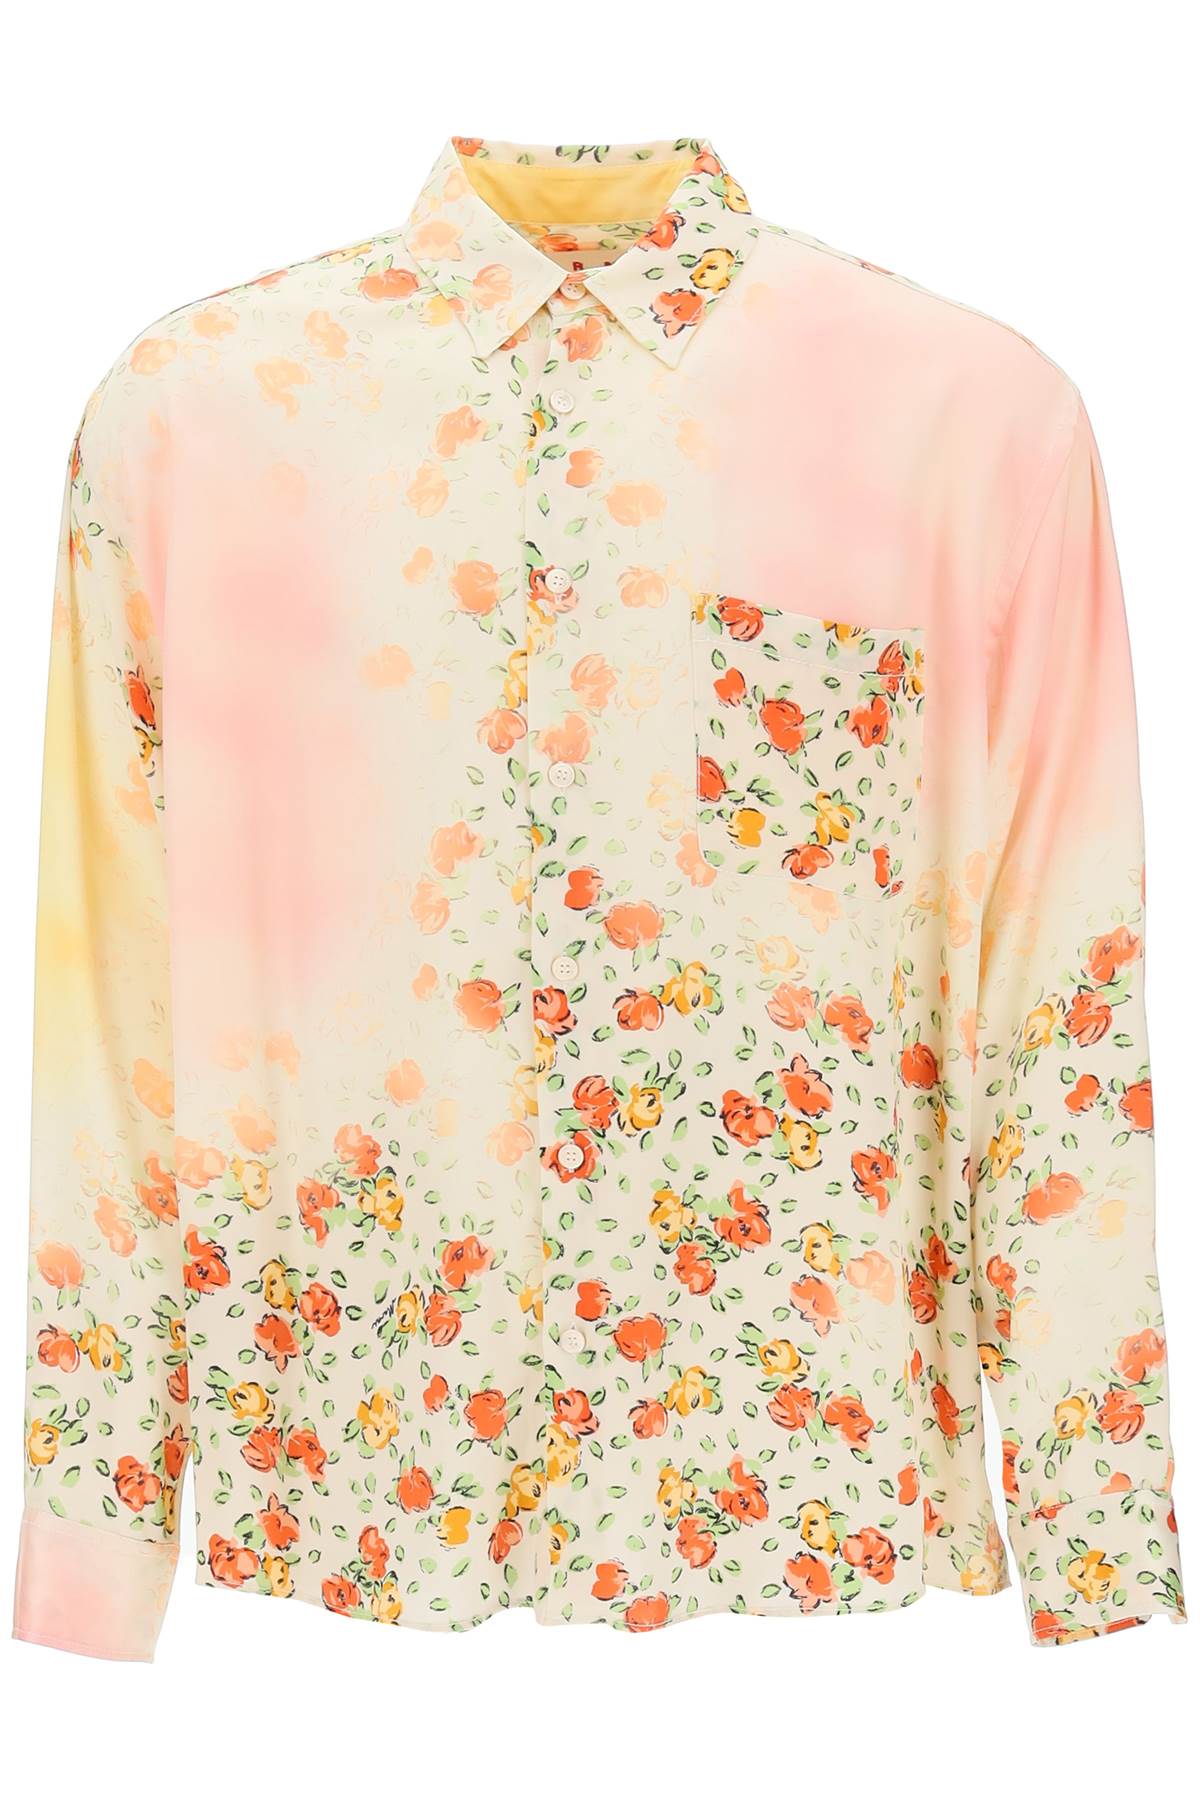 Marni Satin Shirt With Floral Print